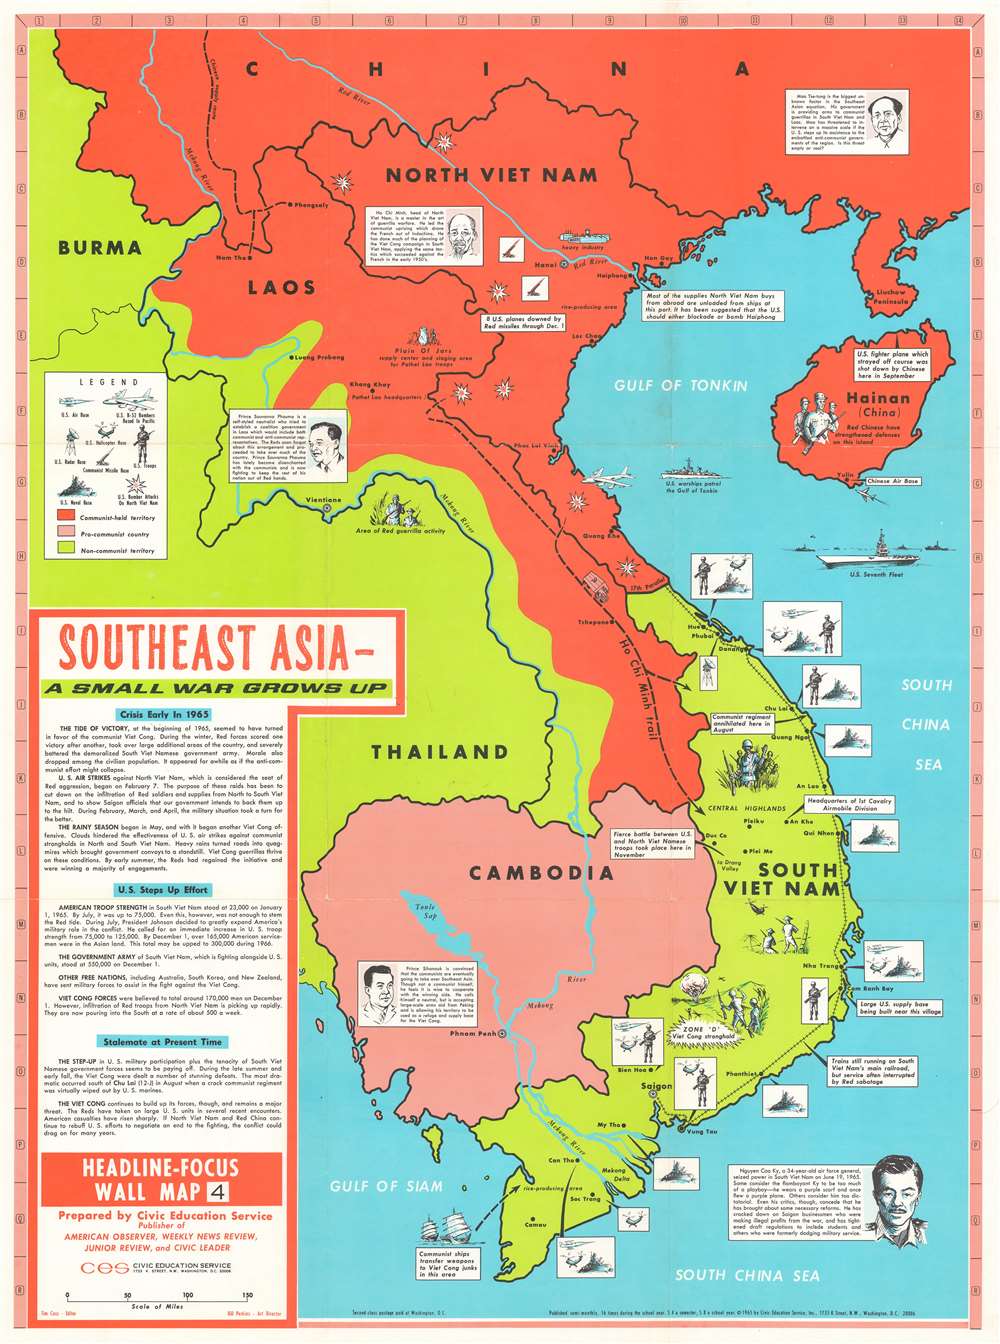 Southeast Asia - A Small War Grows Up. Headline-Focus Wall Map 4. - Main View